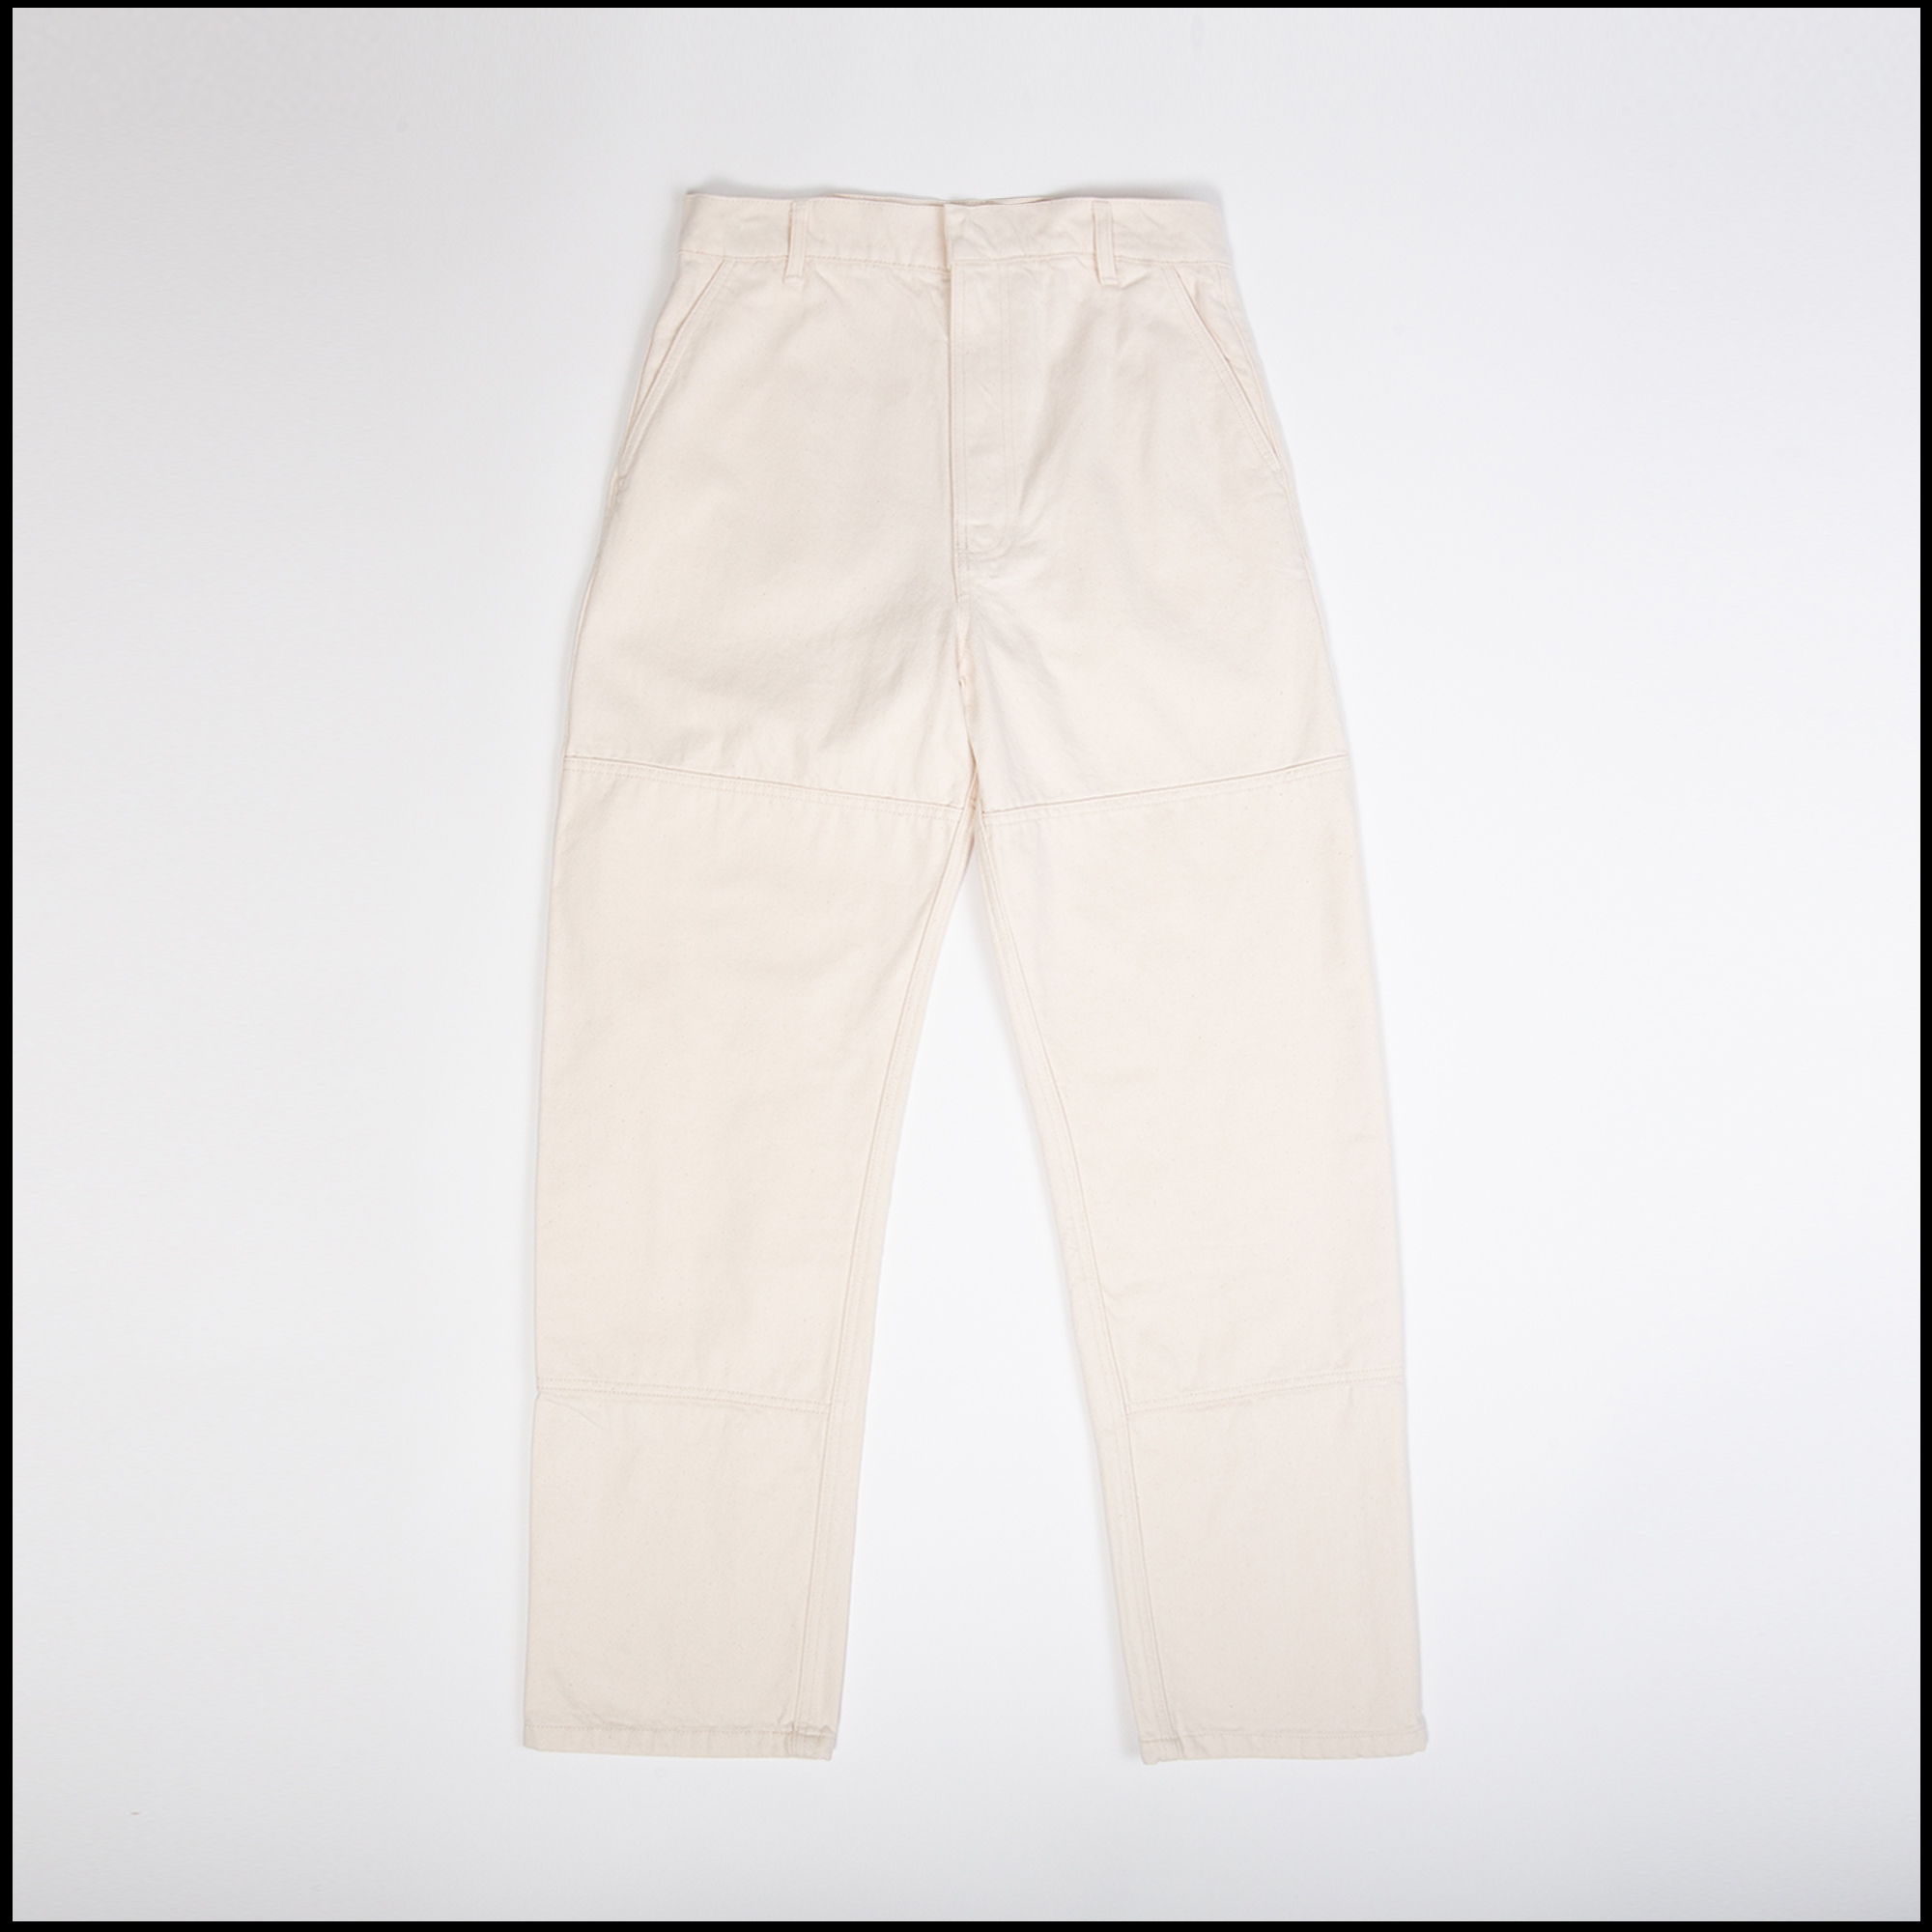 4 POCKET pants in Ecru color by Arpenteur